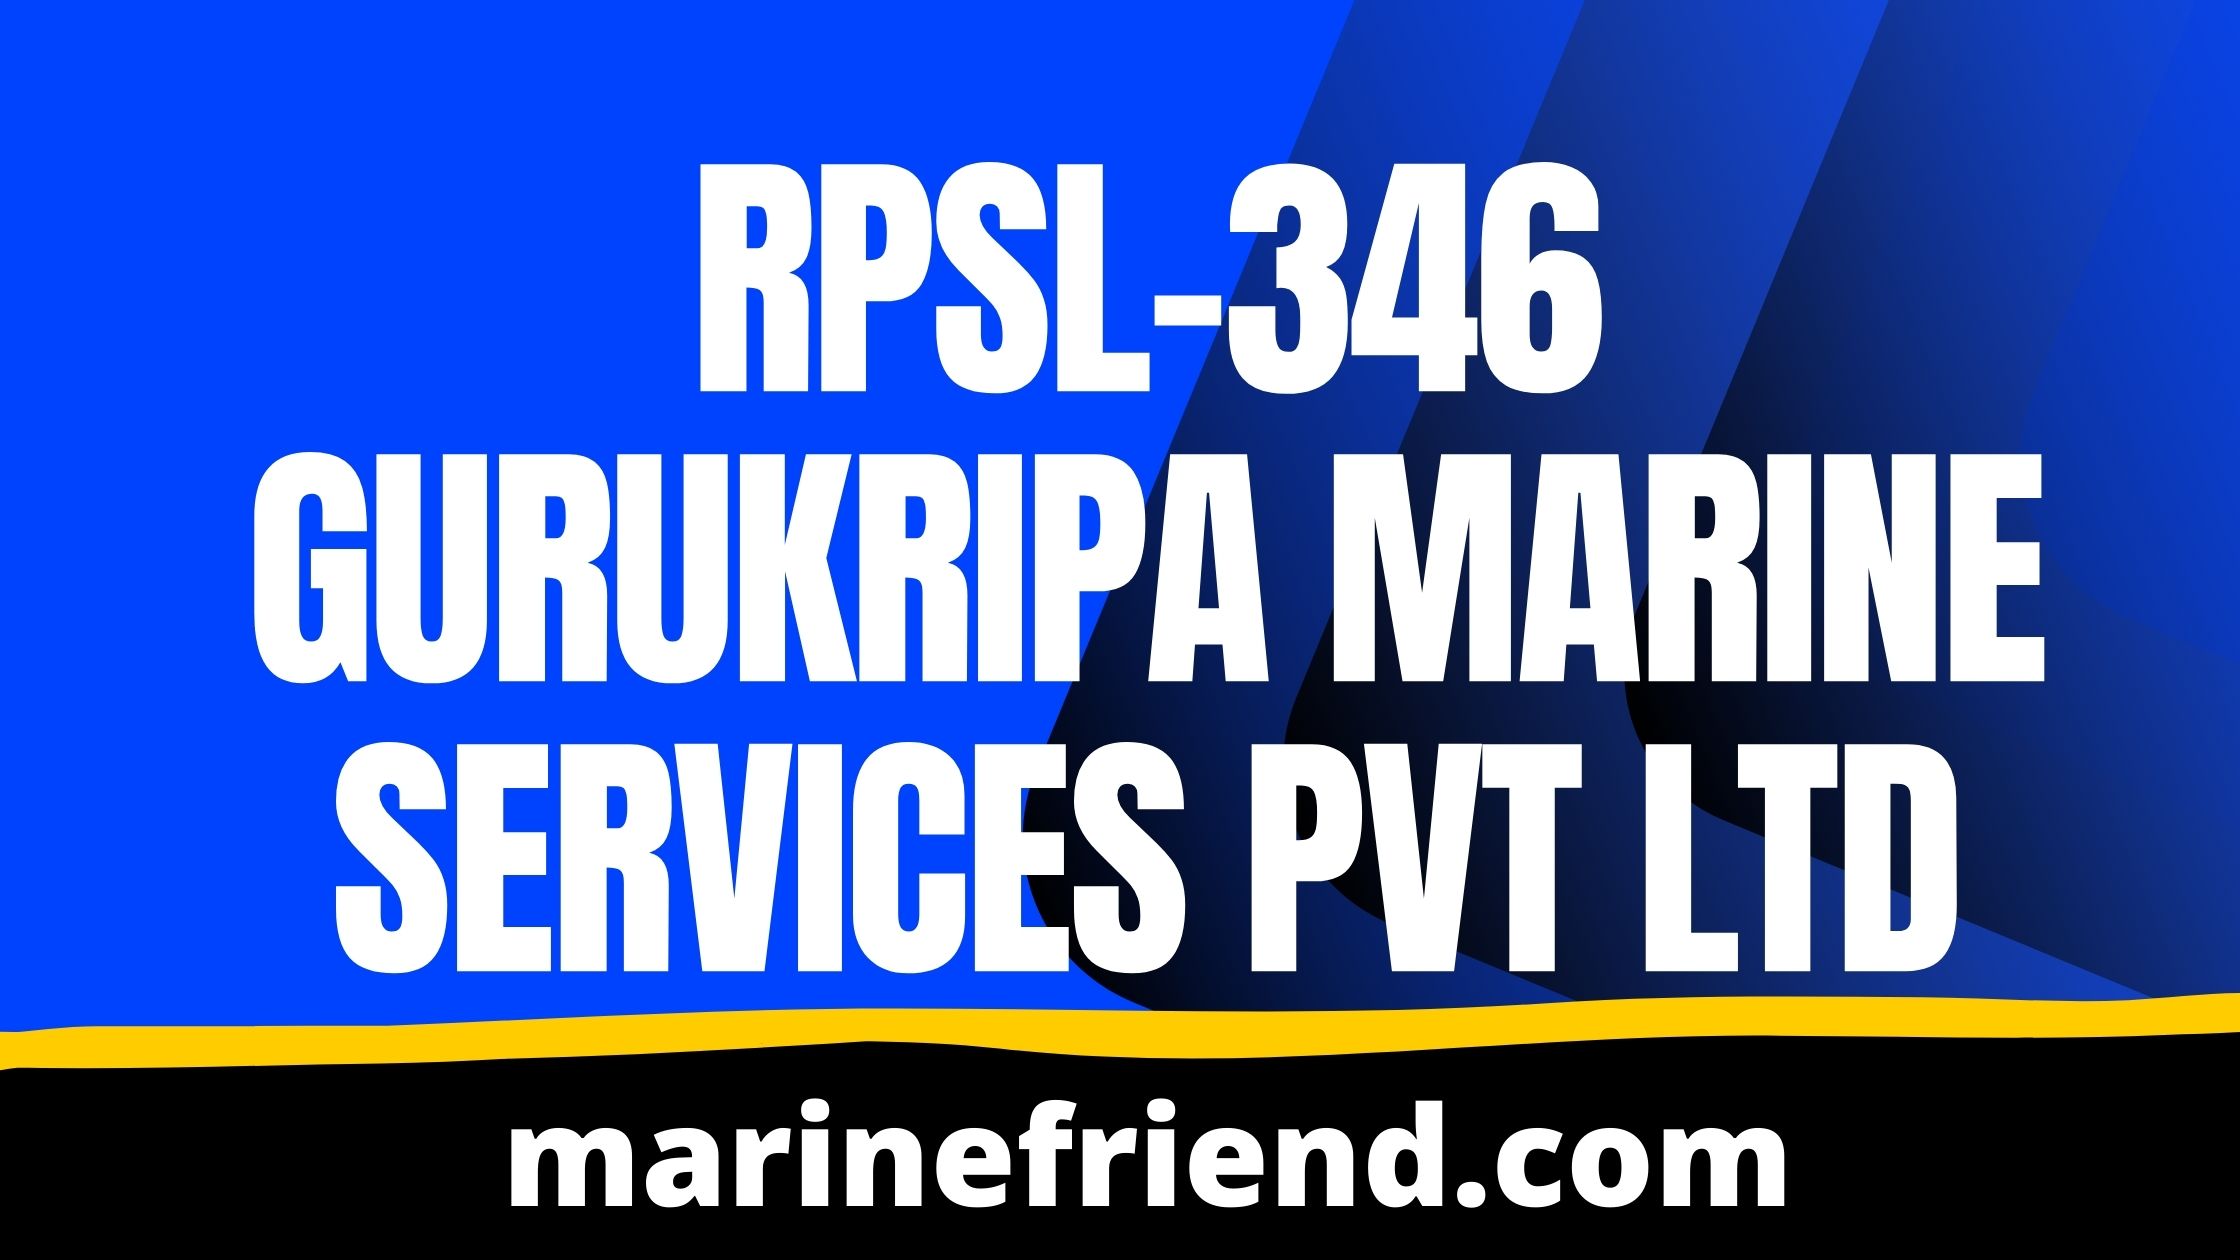 GURUKRIPA MARINE SERVICES PRIVATE LIMITED/RPSL MUM 346